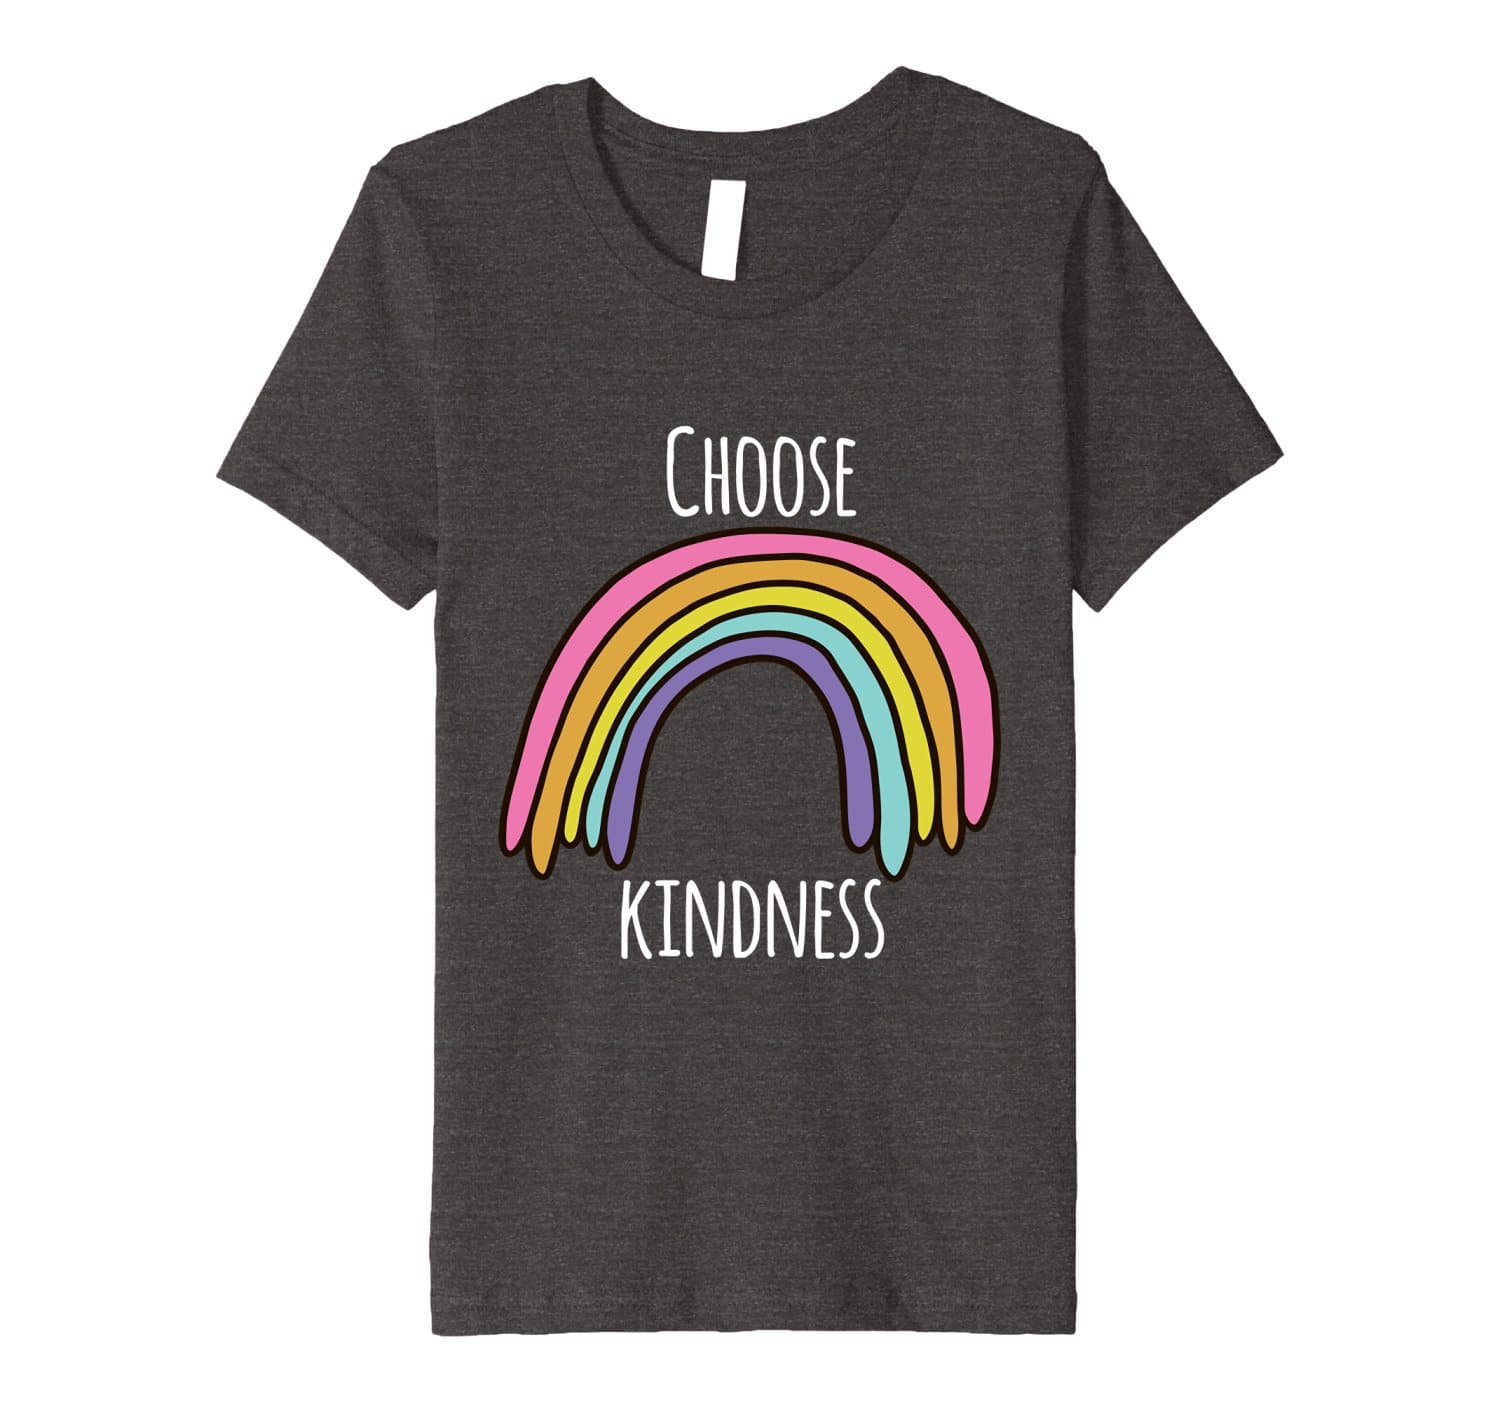 Kids Graphic T-Shirt 2018: Girls Choose Kindness Tee